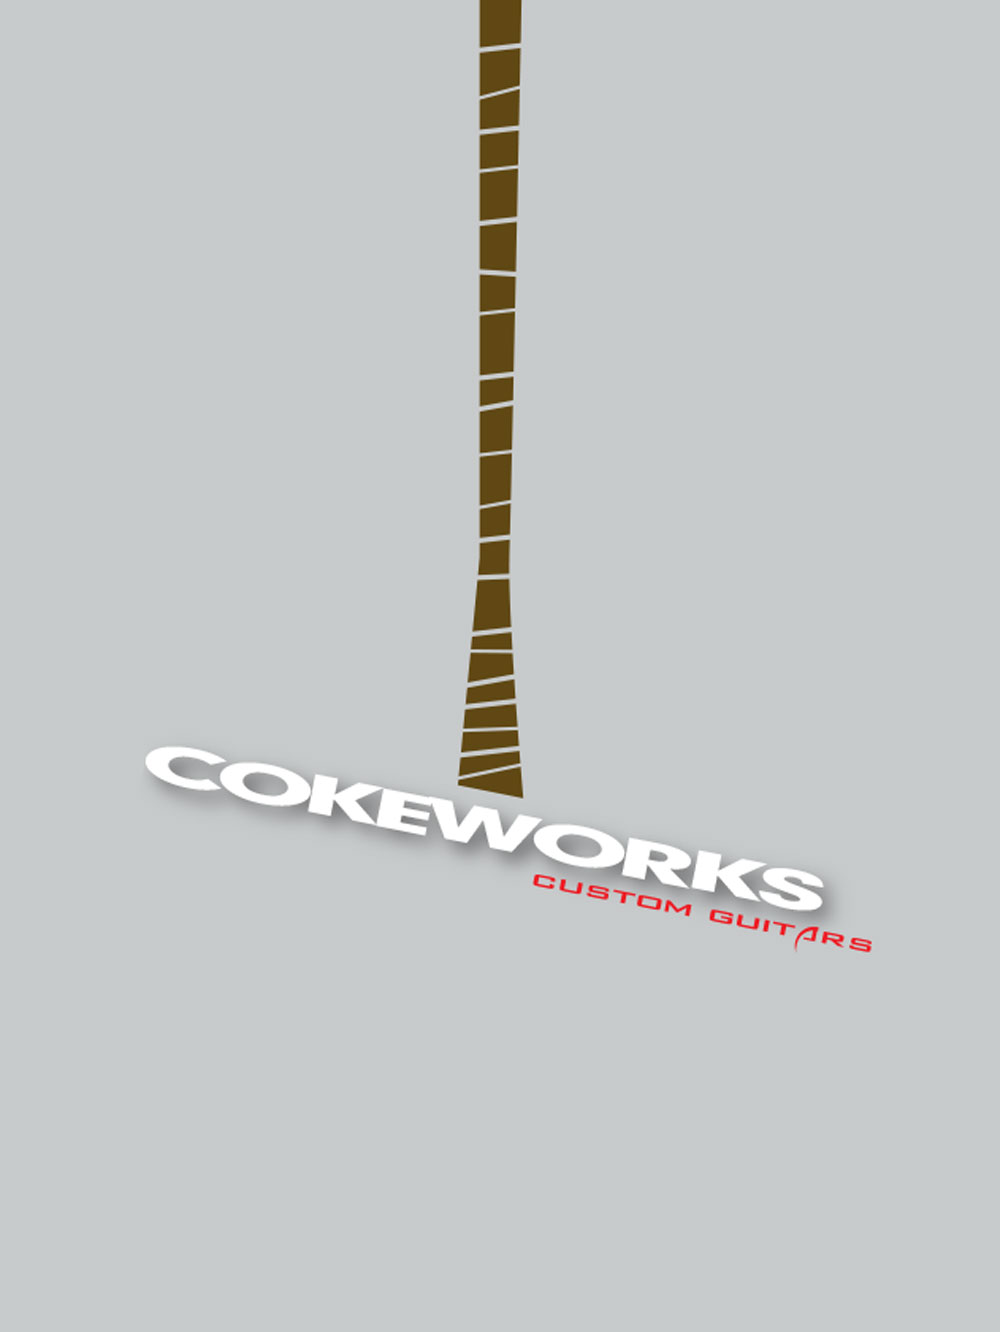 cokeworks